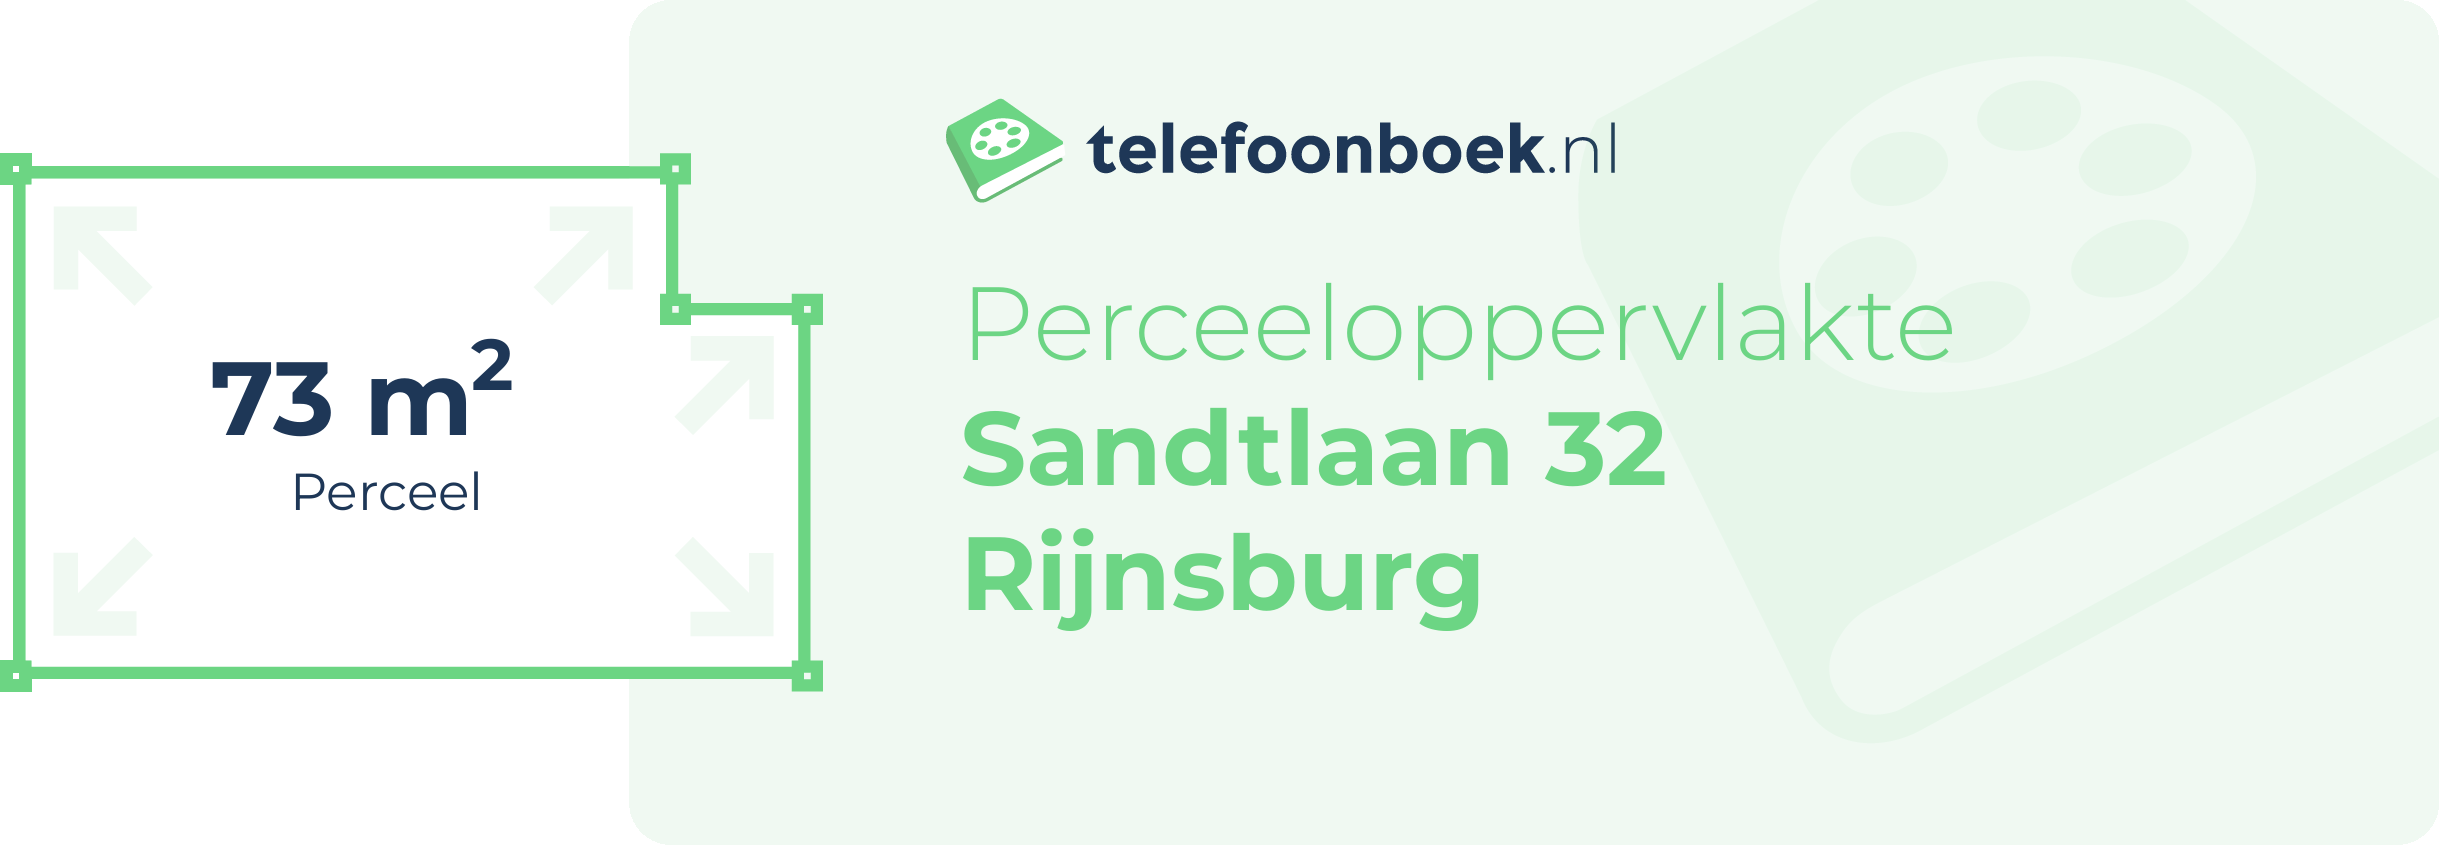 Perceeloppervlakte Sandtlaan 32 Rijnsburg